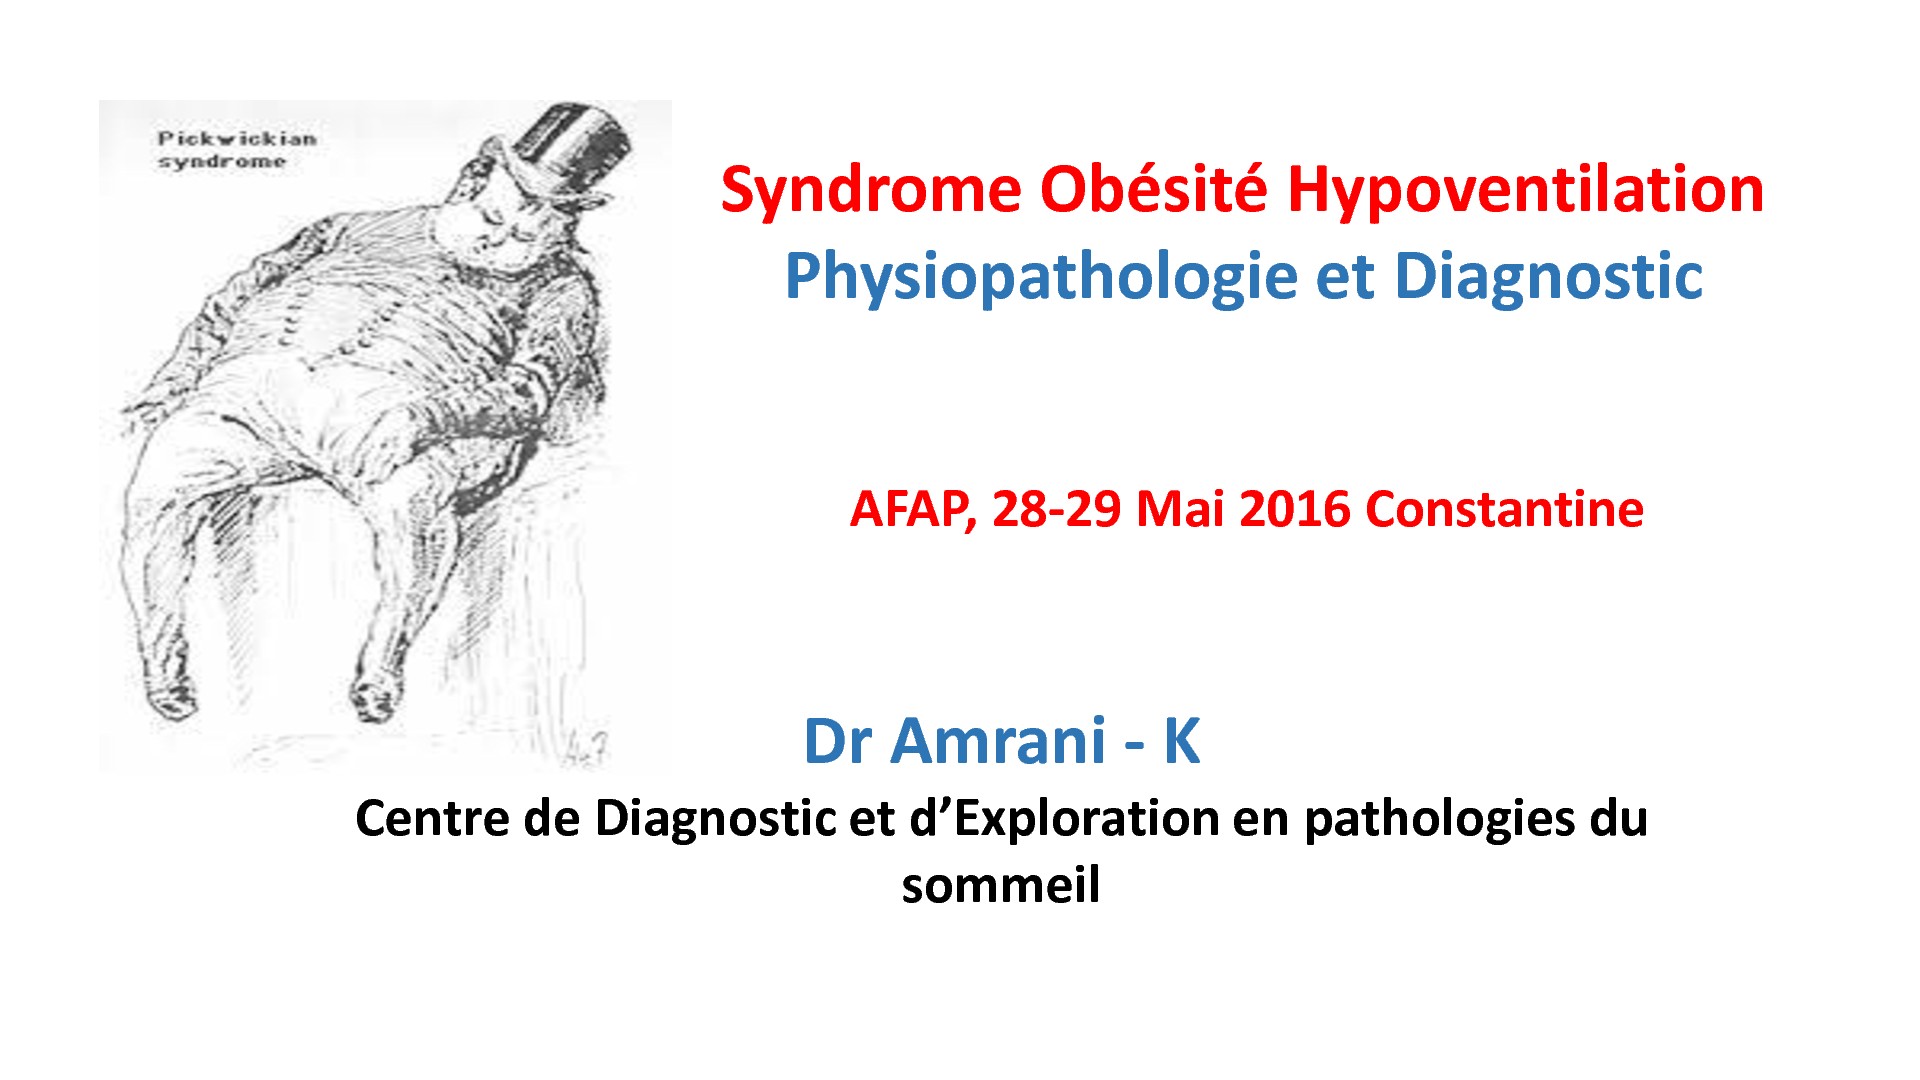 Syndrome Obésité Hypoventilation, physiopathologie et diagnostic. Amrani K.